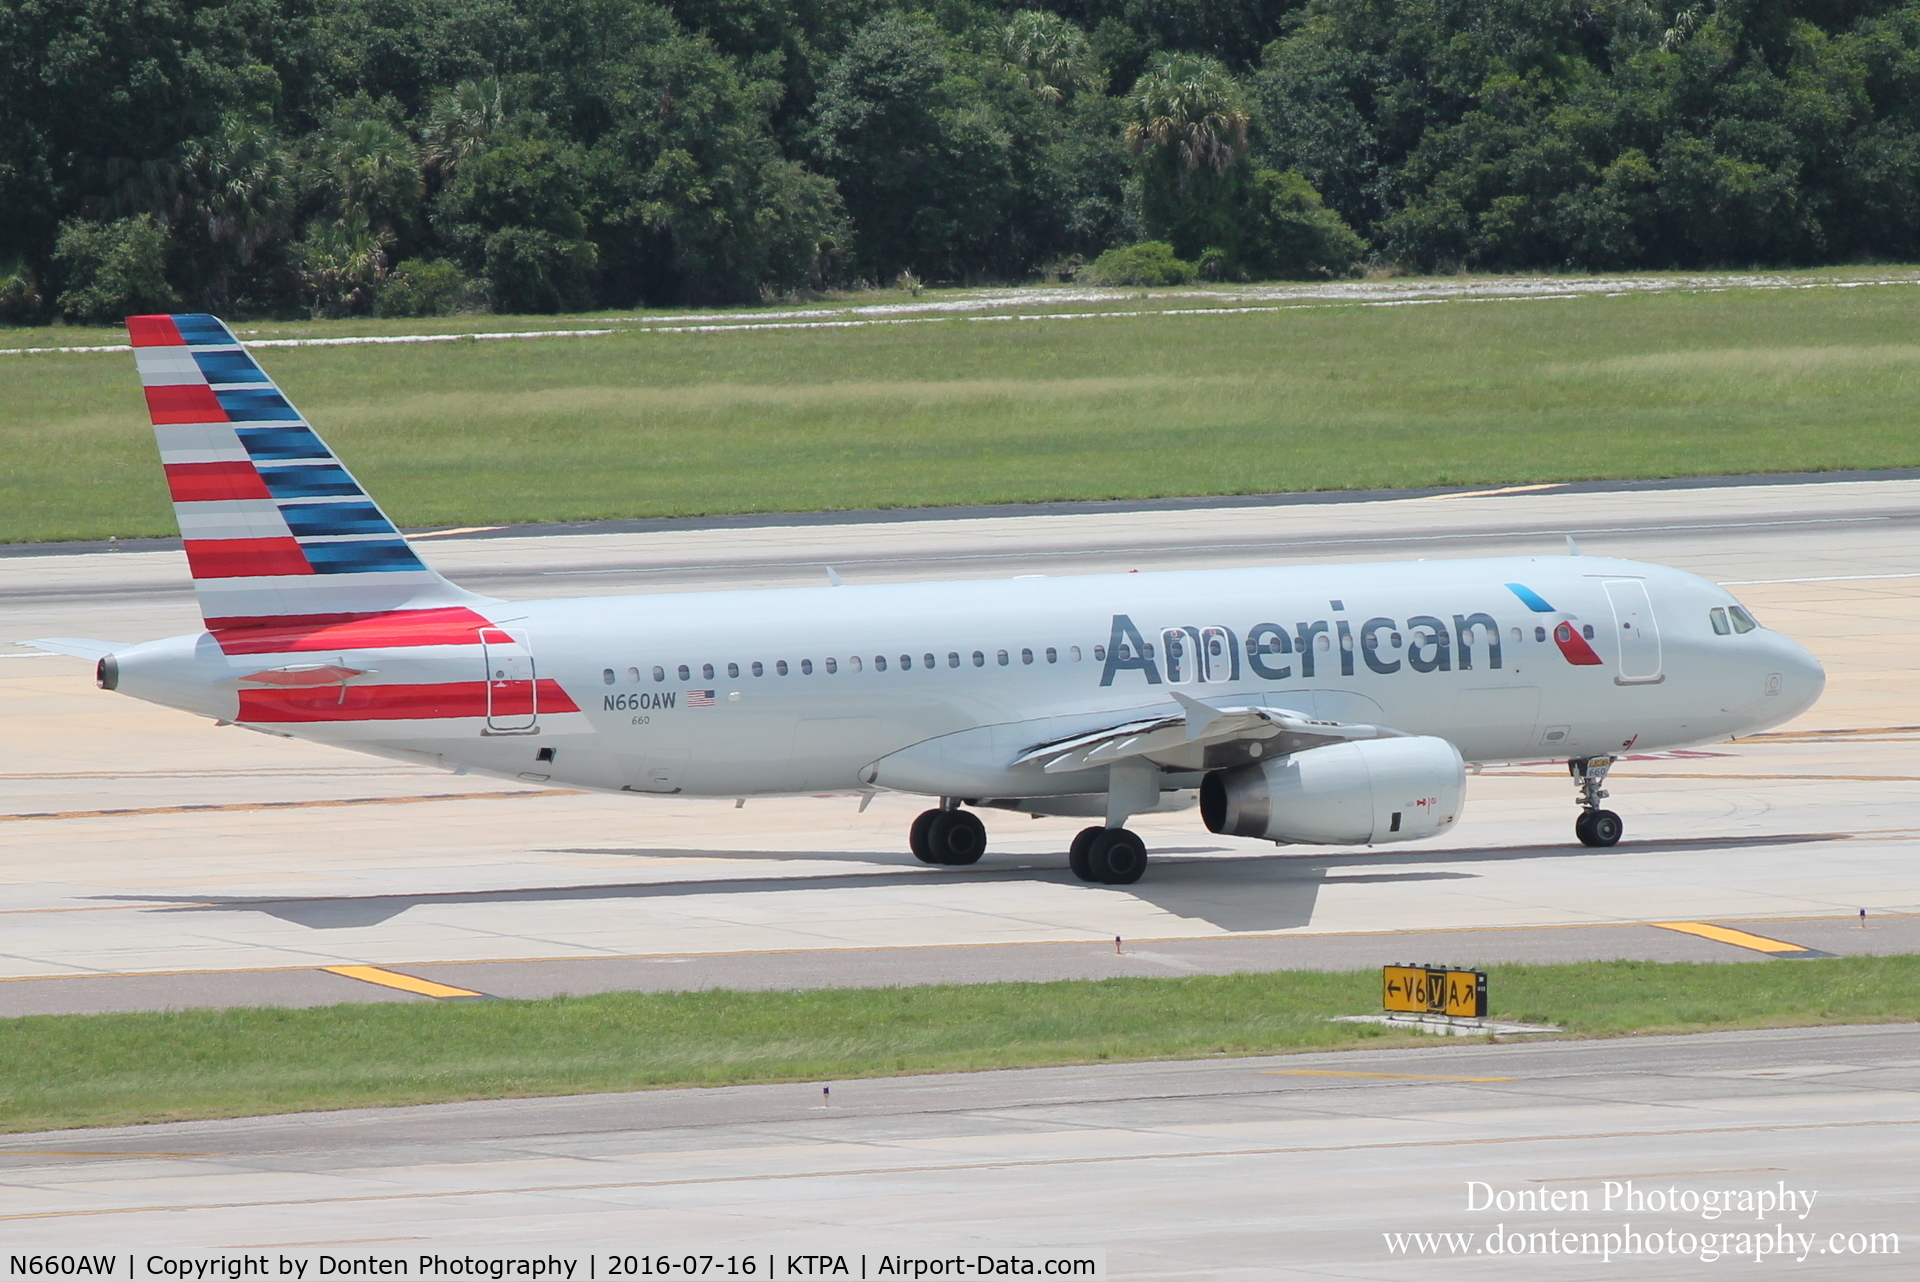 N660AW, 2000 Airbus A320-232 C/N 1234, American Flight 814 (N660AW) departs Tampa International Airport enroute to Philadelphia International Airport